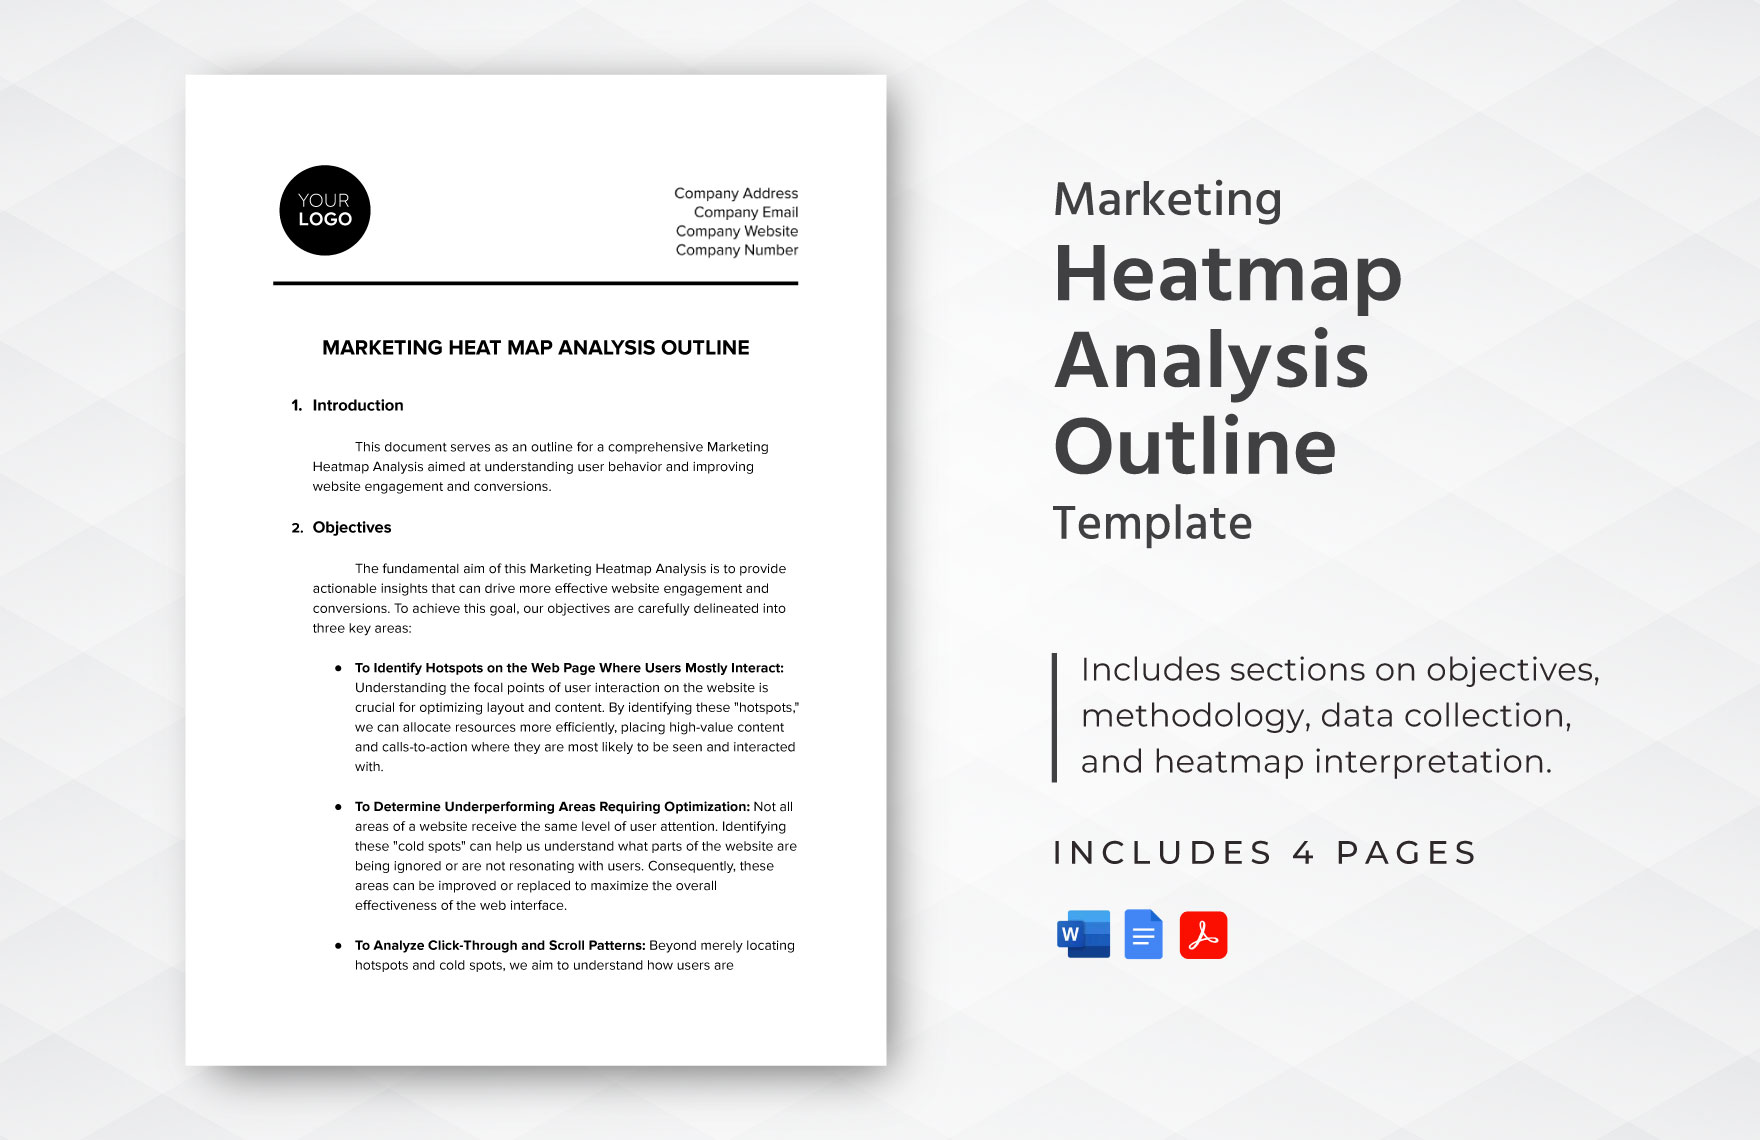 Marketing Heatmap Analysis Outline Template